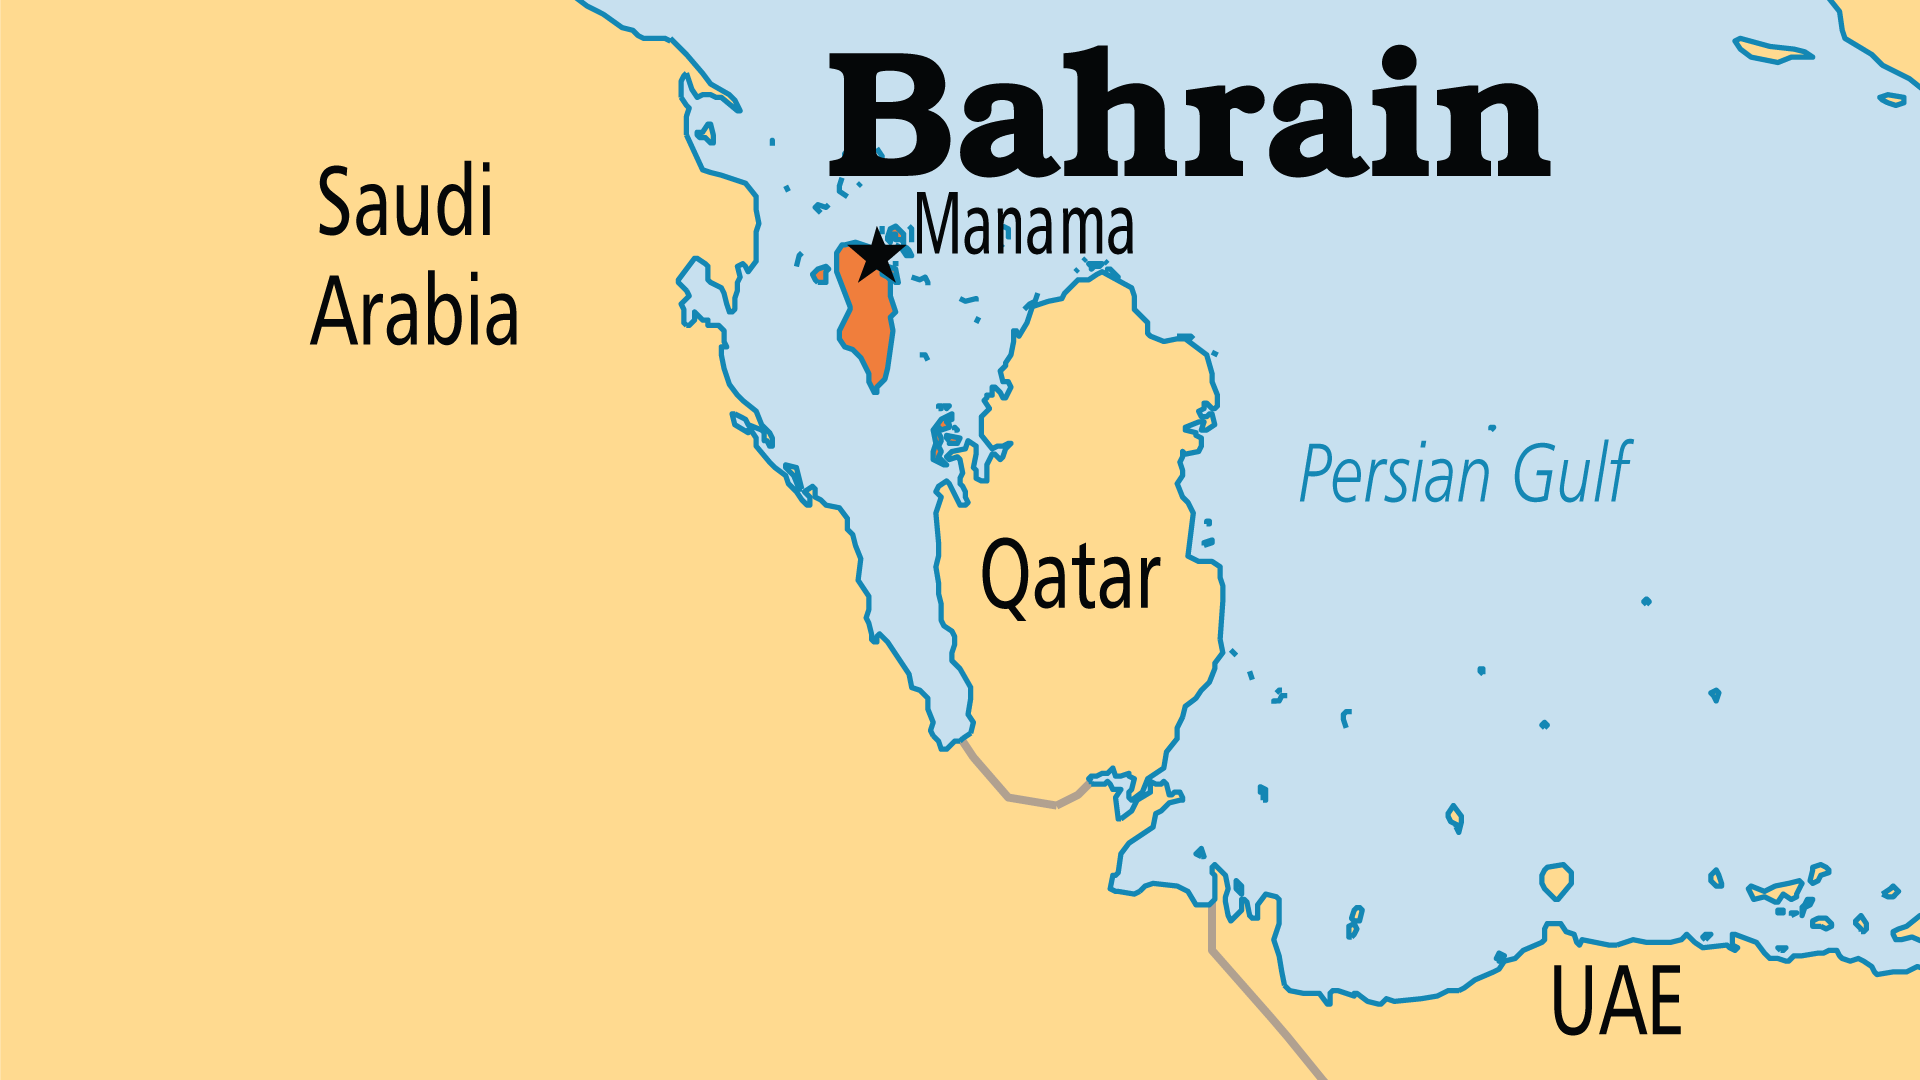 Bahrain (Operation World)